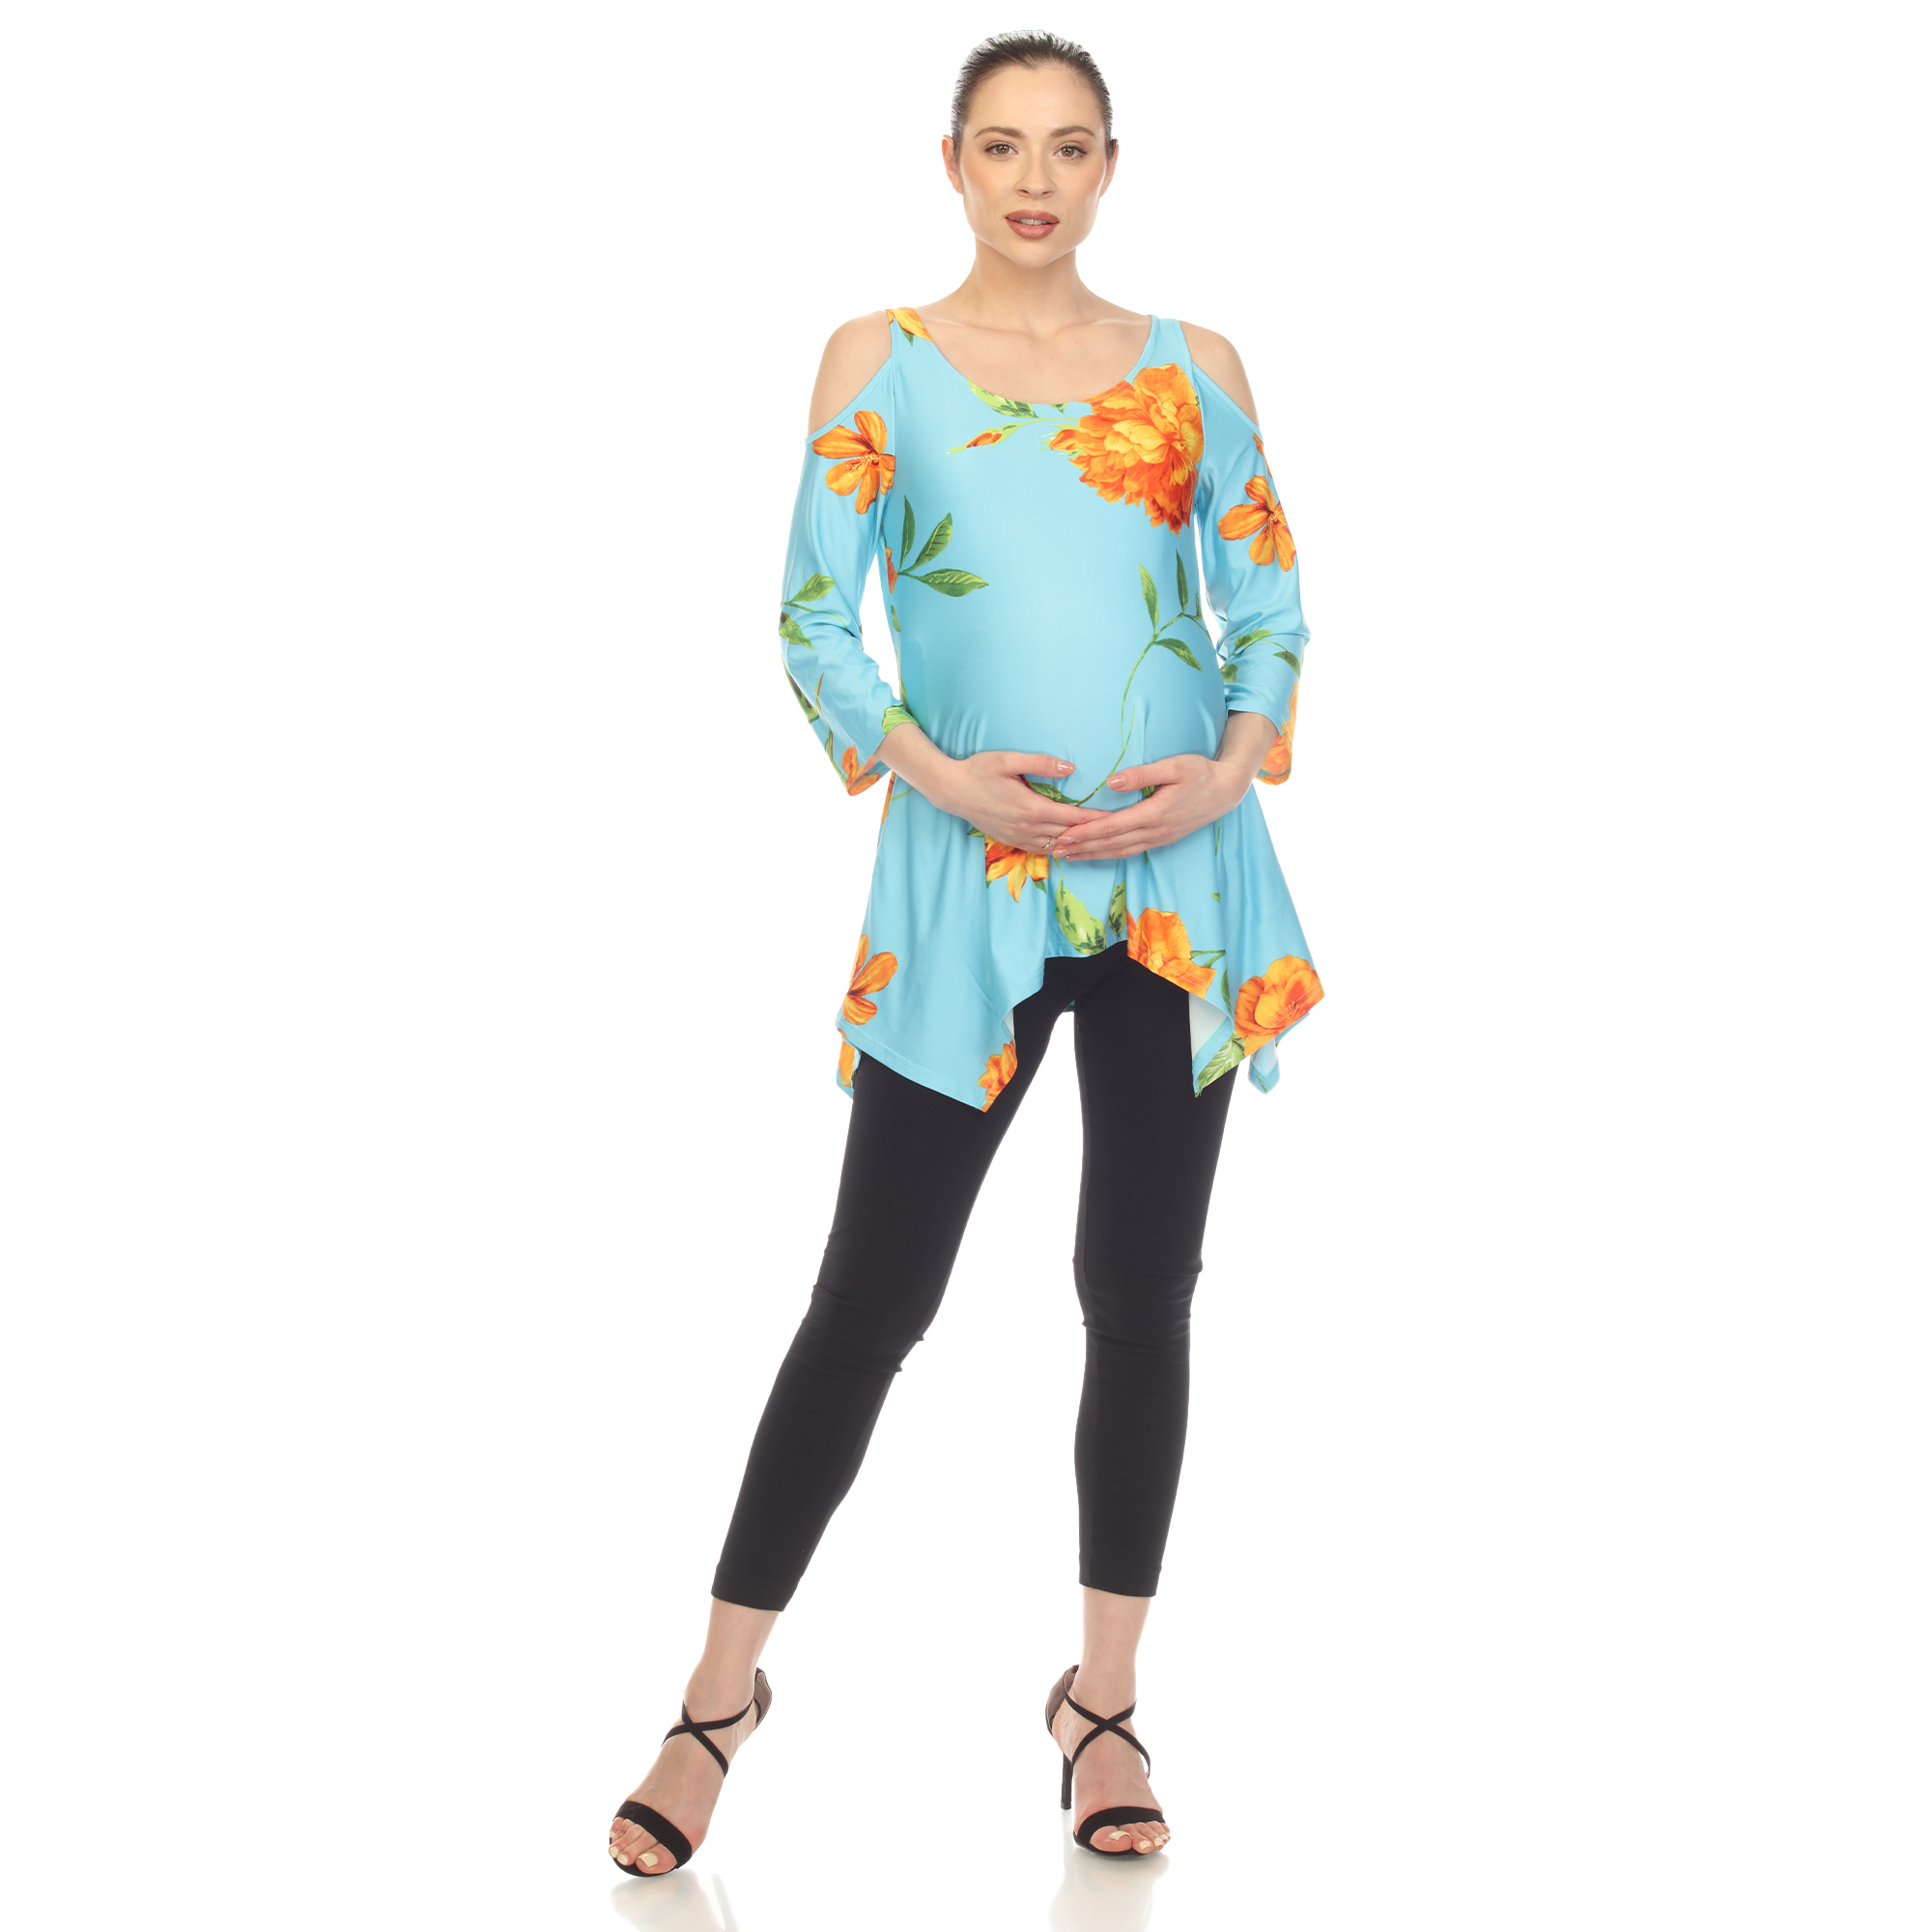 White Mark Women's Maternity Floral Cold Shoulder Tunic Top - Blue/Orange, Medium